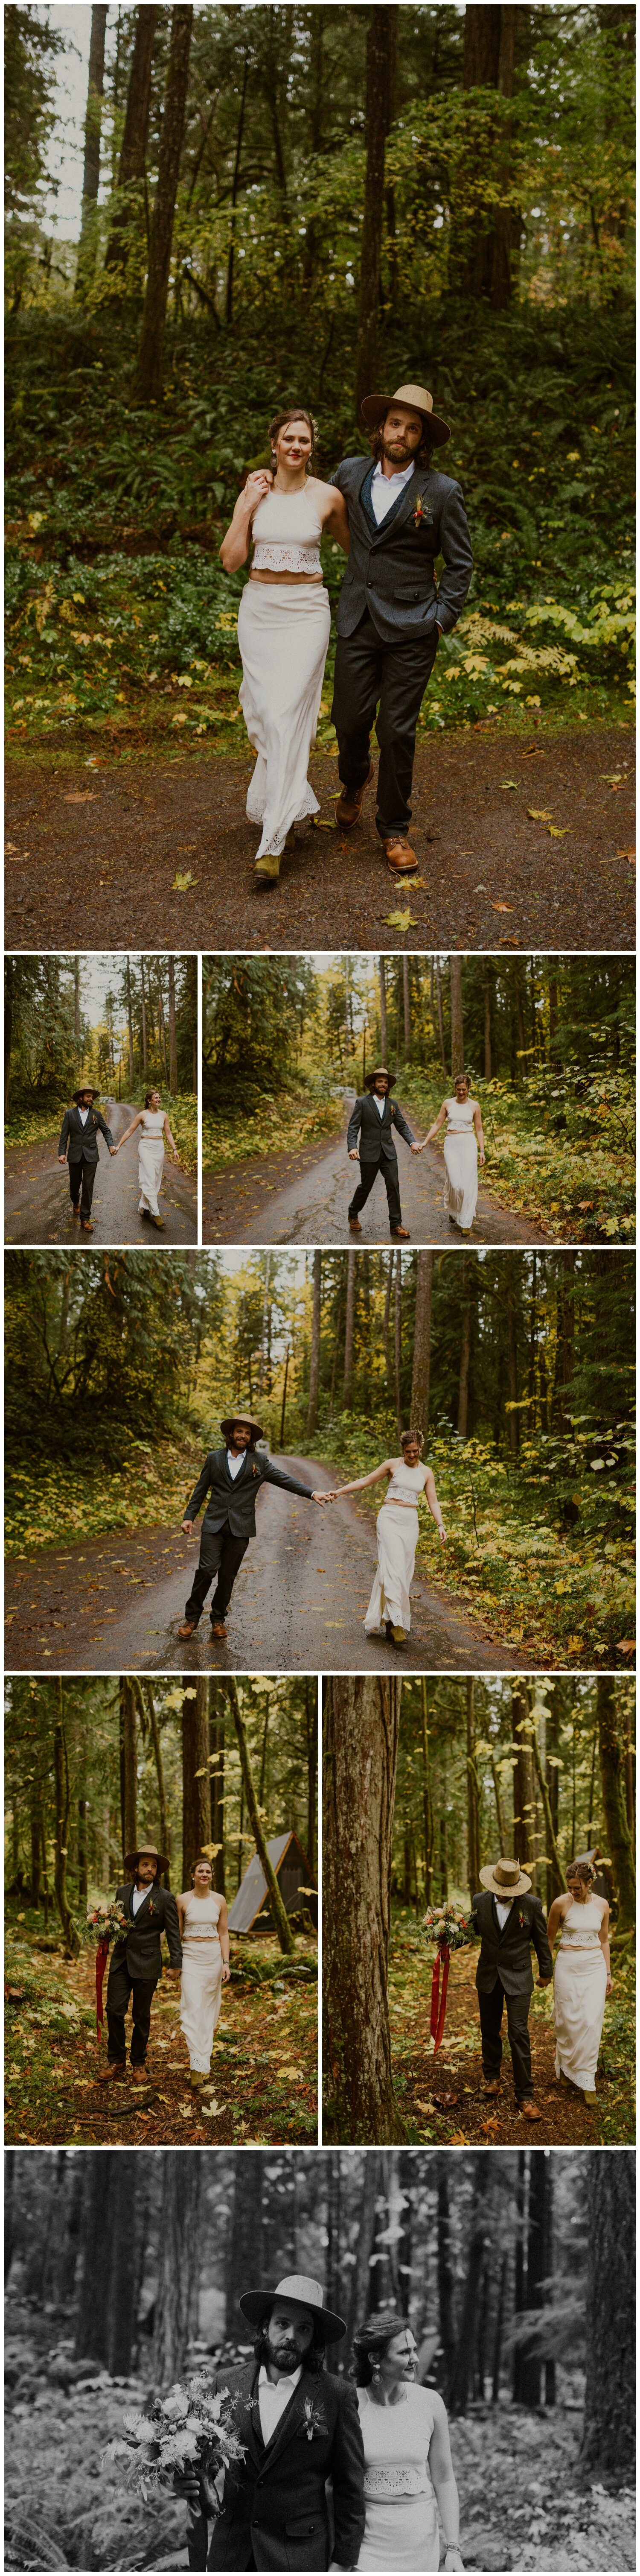 Loloma Lodge Woodstock Themed Wedding in Oregon_0038.jpg